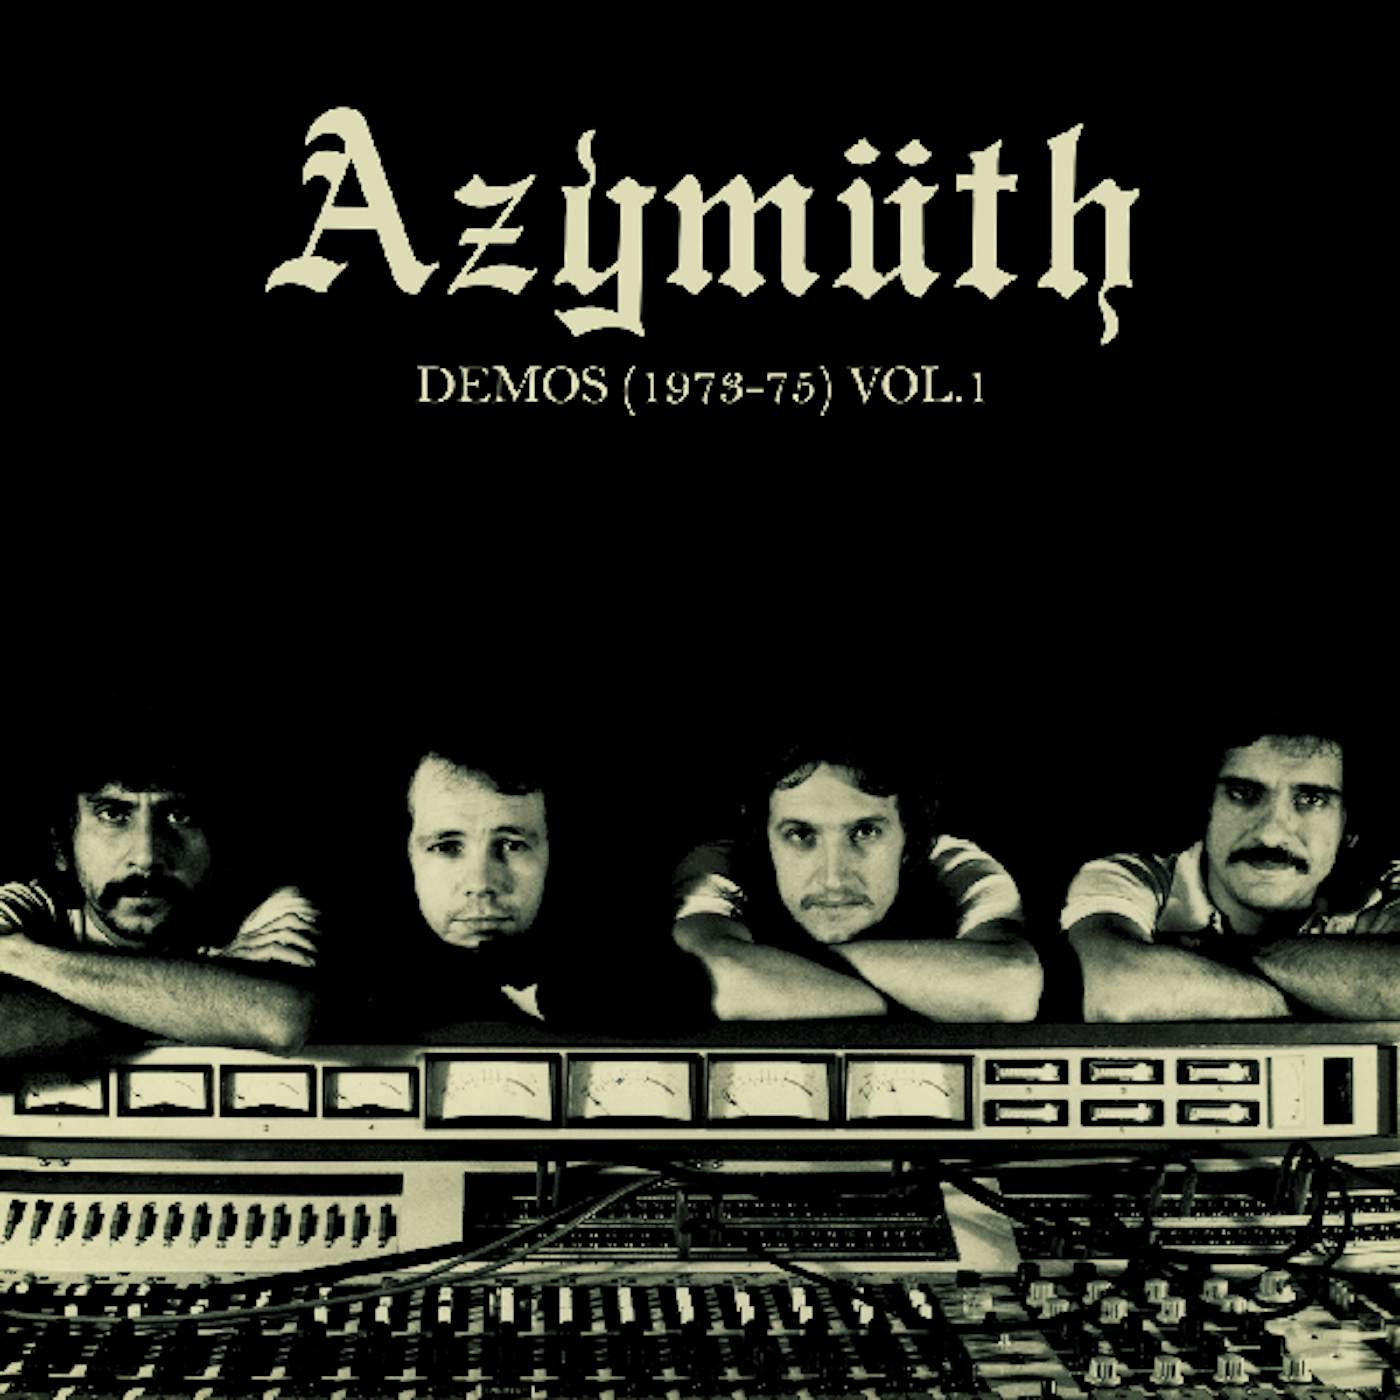 Azymuth DEMOS (1973-75) 1 Vinyl Record